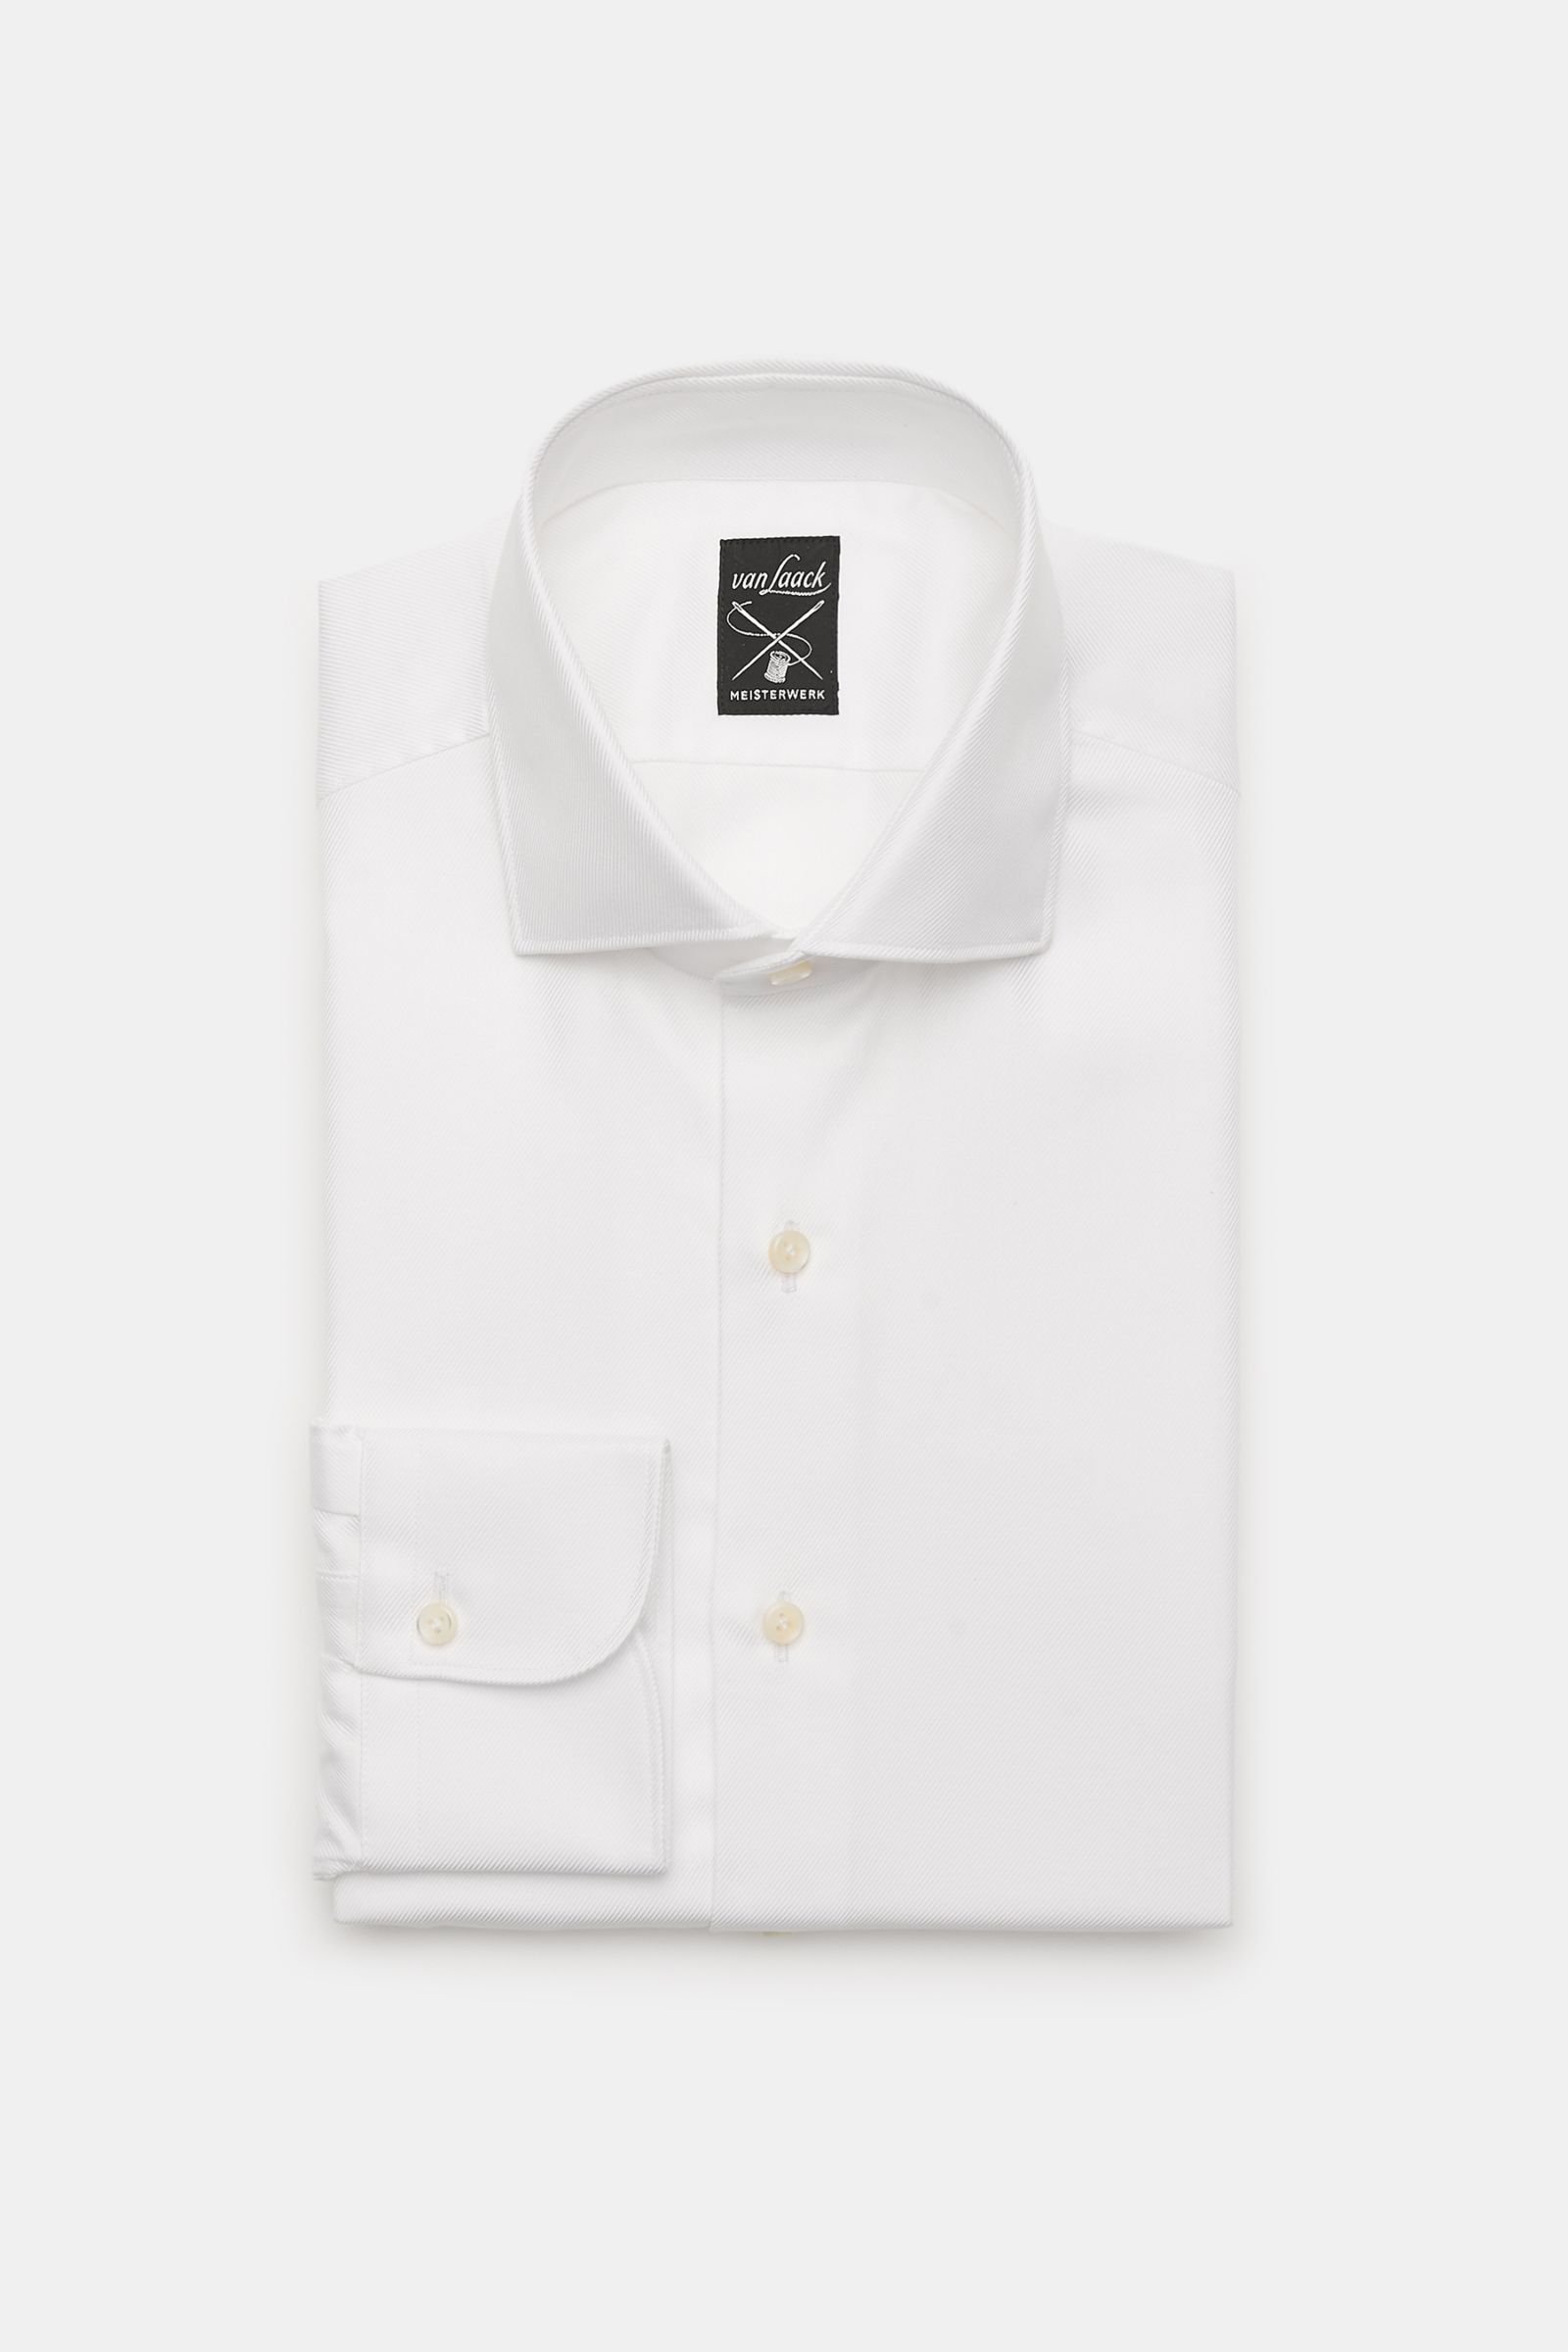 Business shirt 'Mivara Tailor Fit' shark collar white